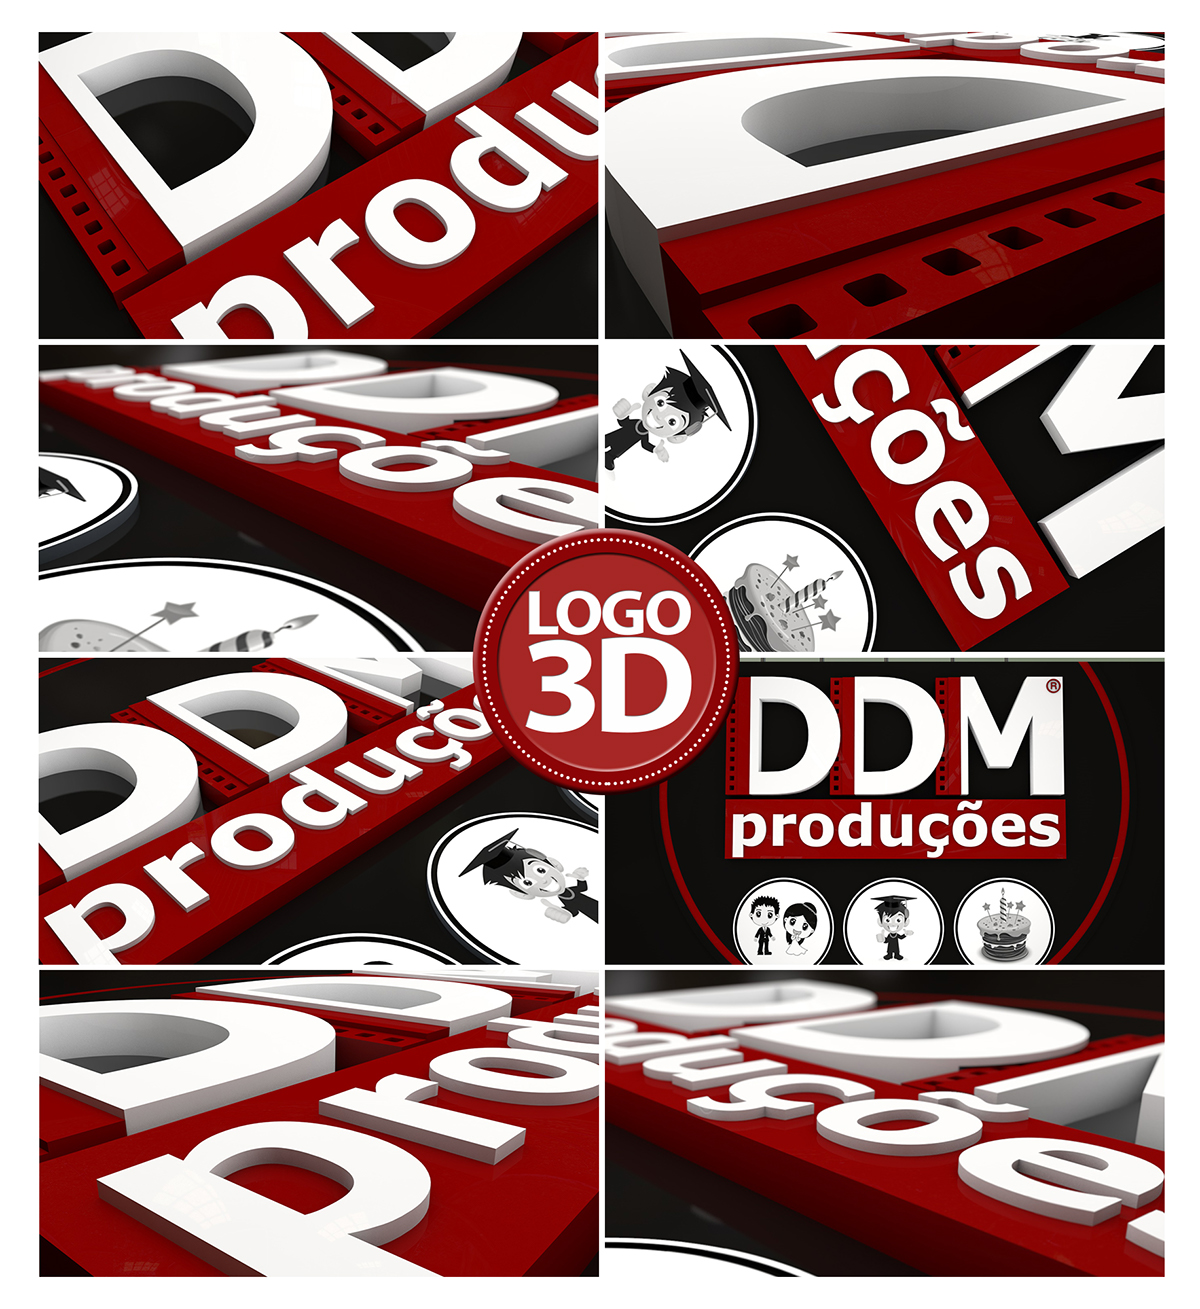 design design3D c4d cinema4d 3D marca3 logo3d logo 3d